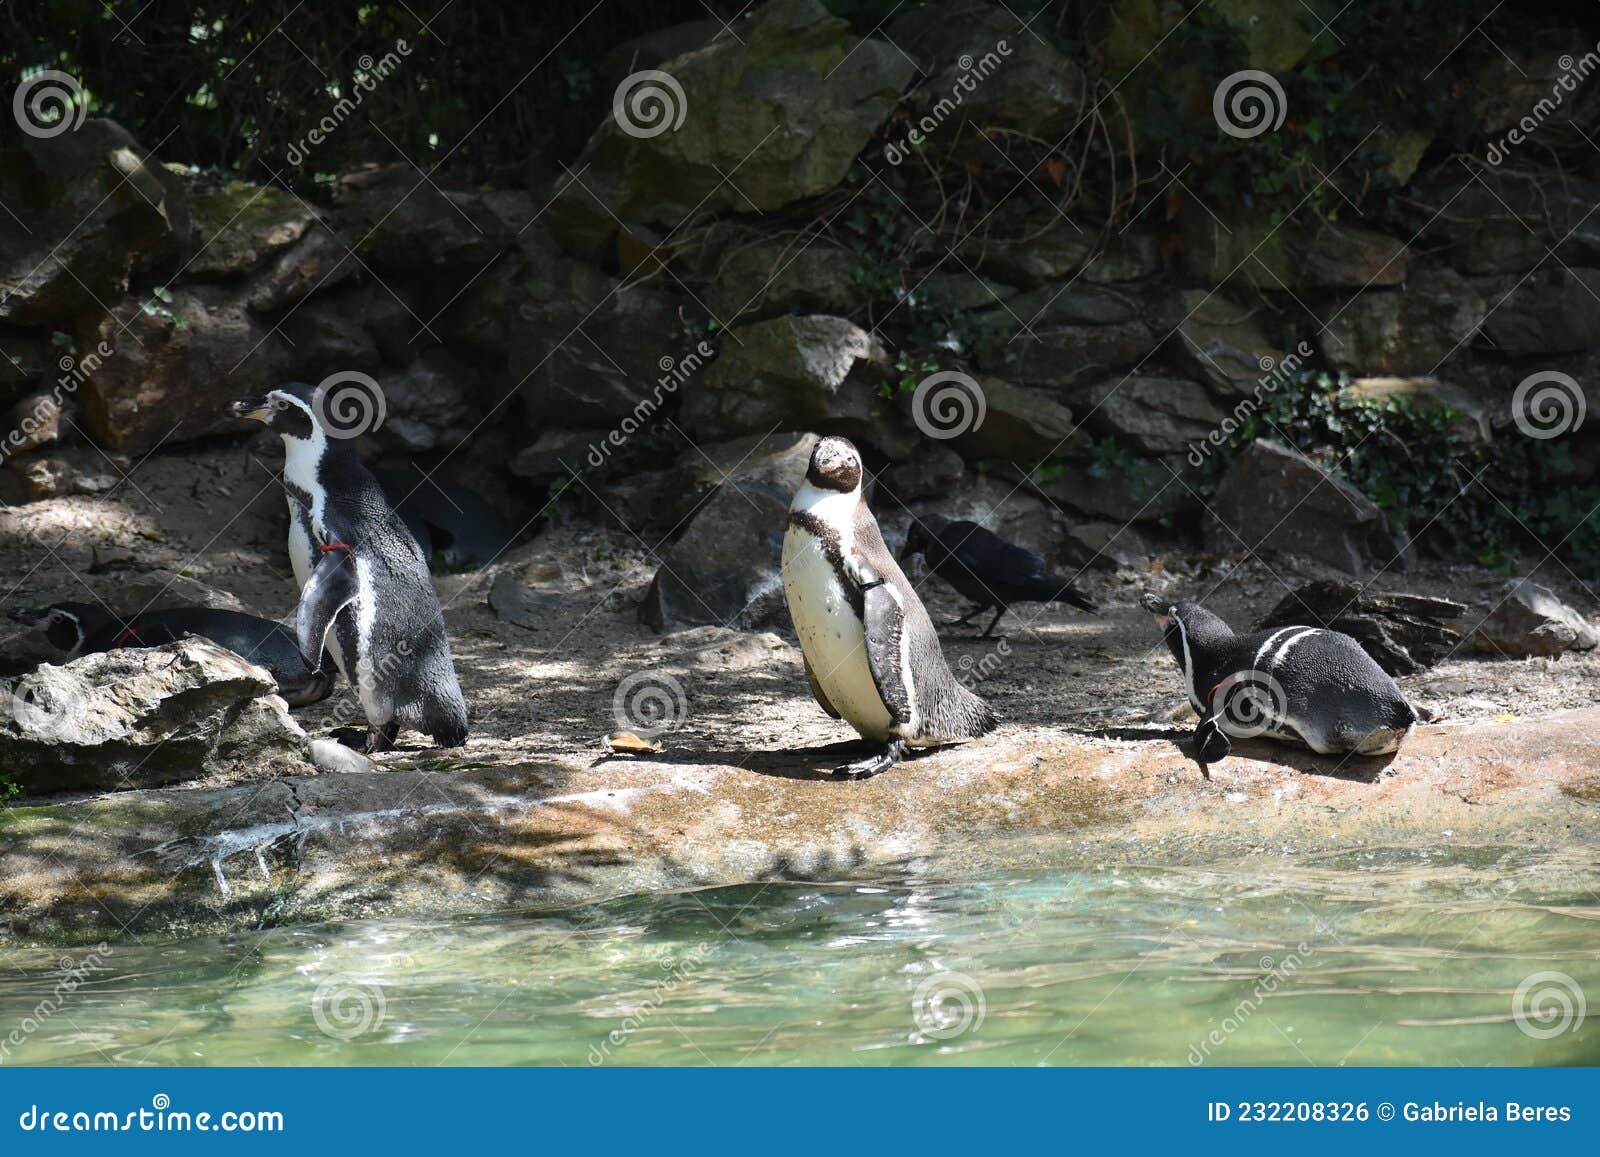 humboldt penguin, at avifauna in netherlands..